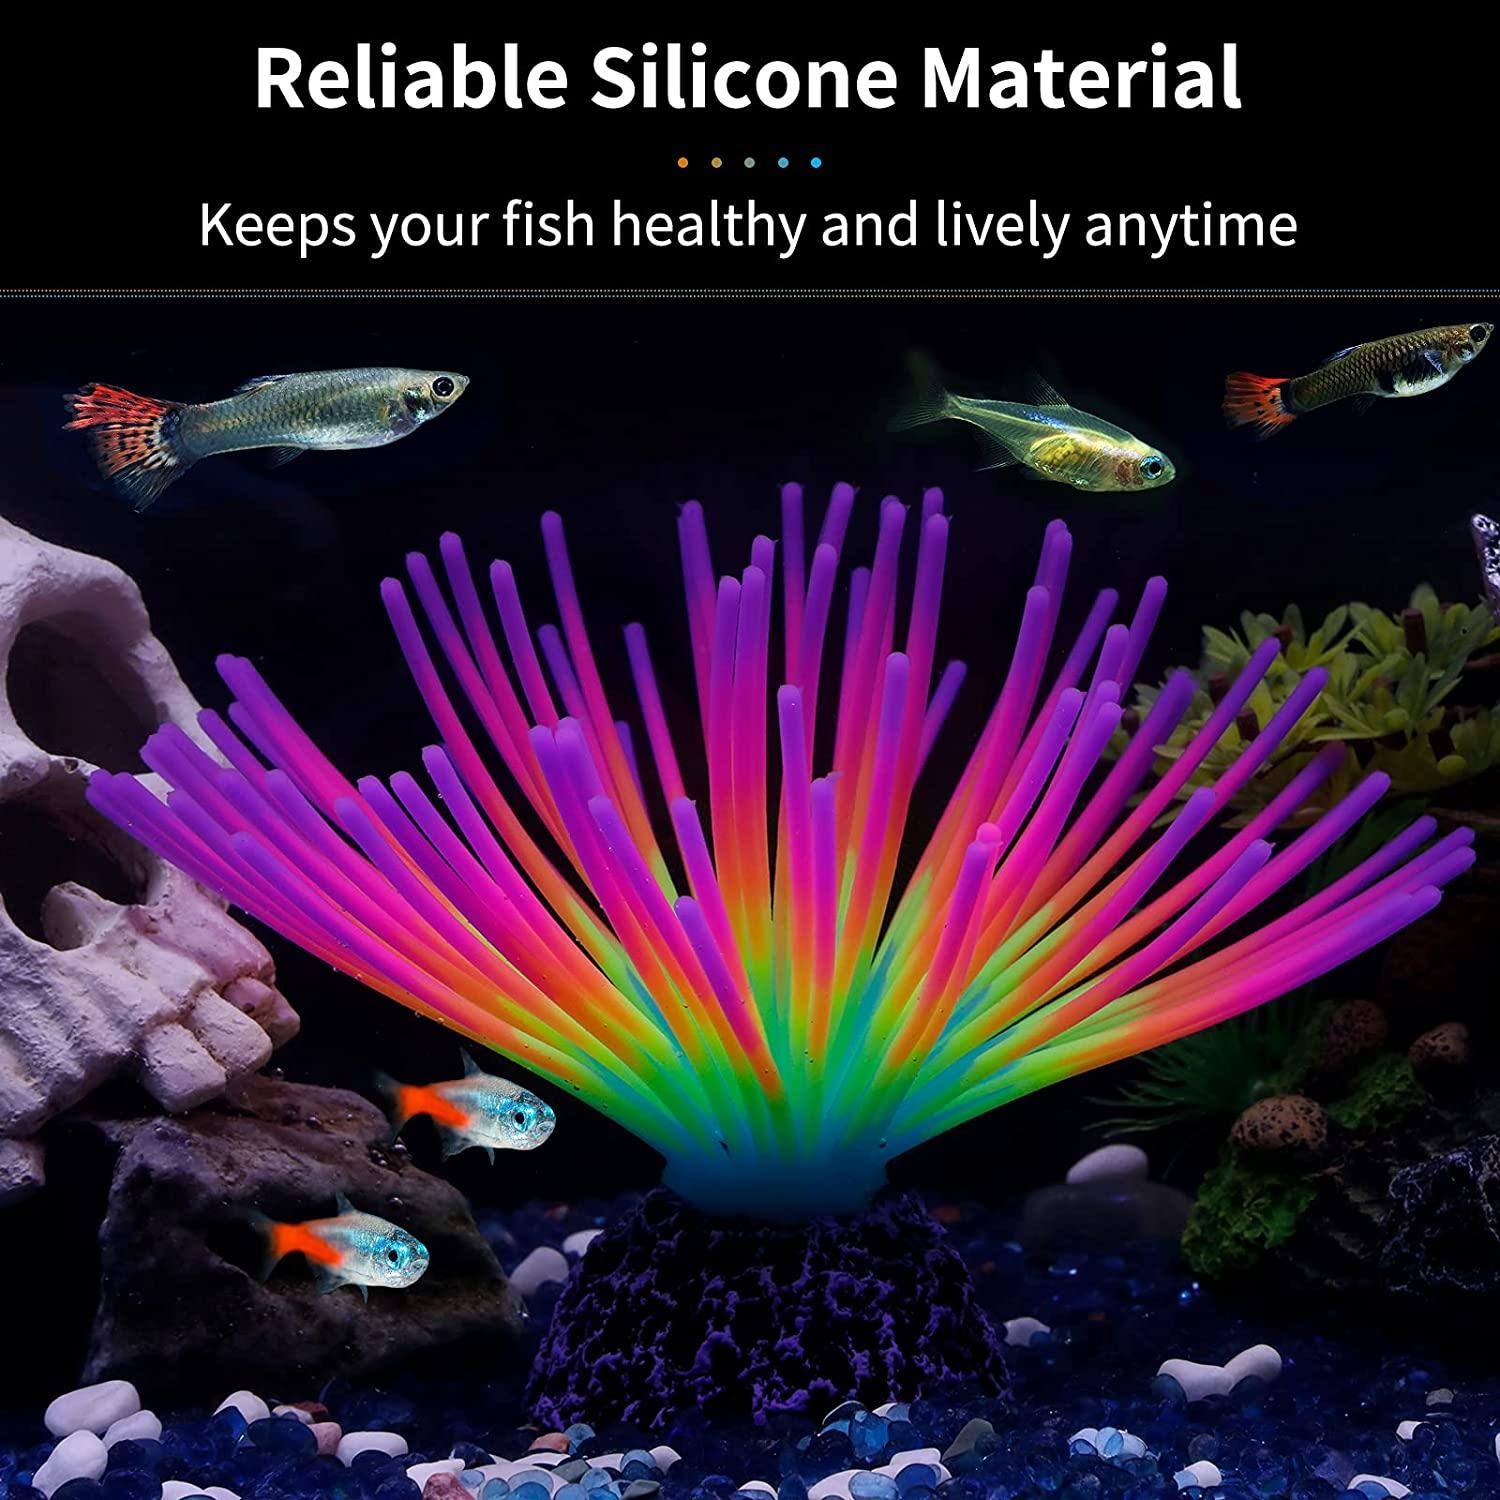 Silicone Glowing Artificial Fish Tank Aquarium Coral Plants Underwater  Decor US